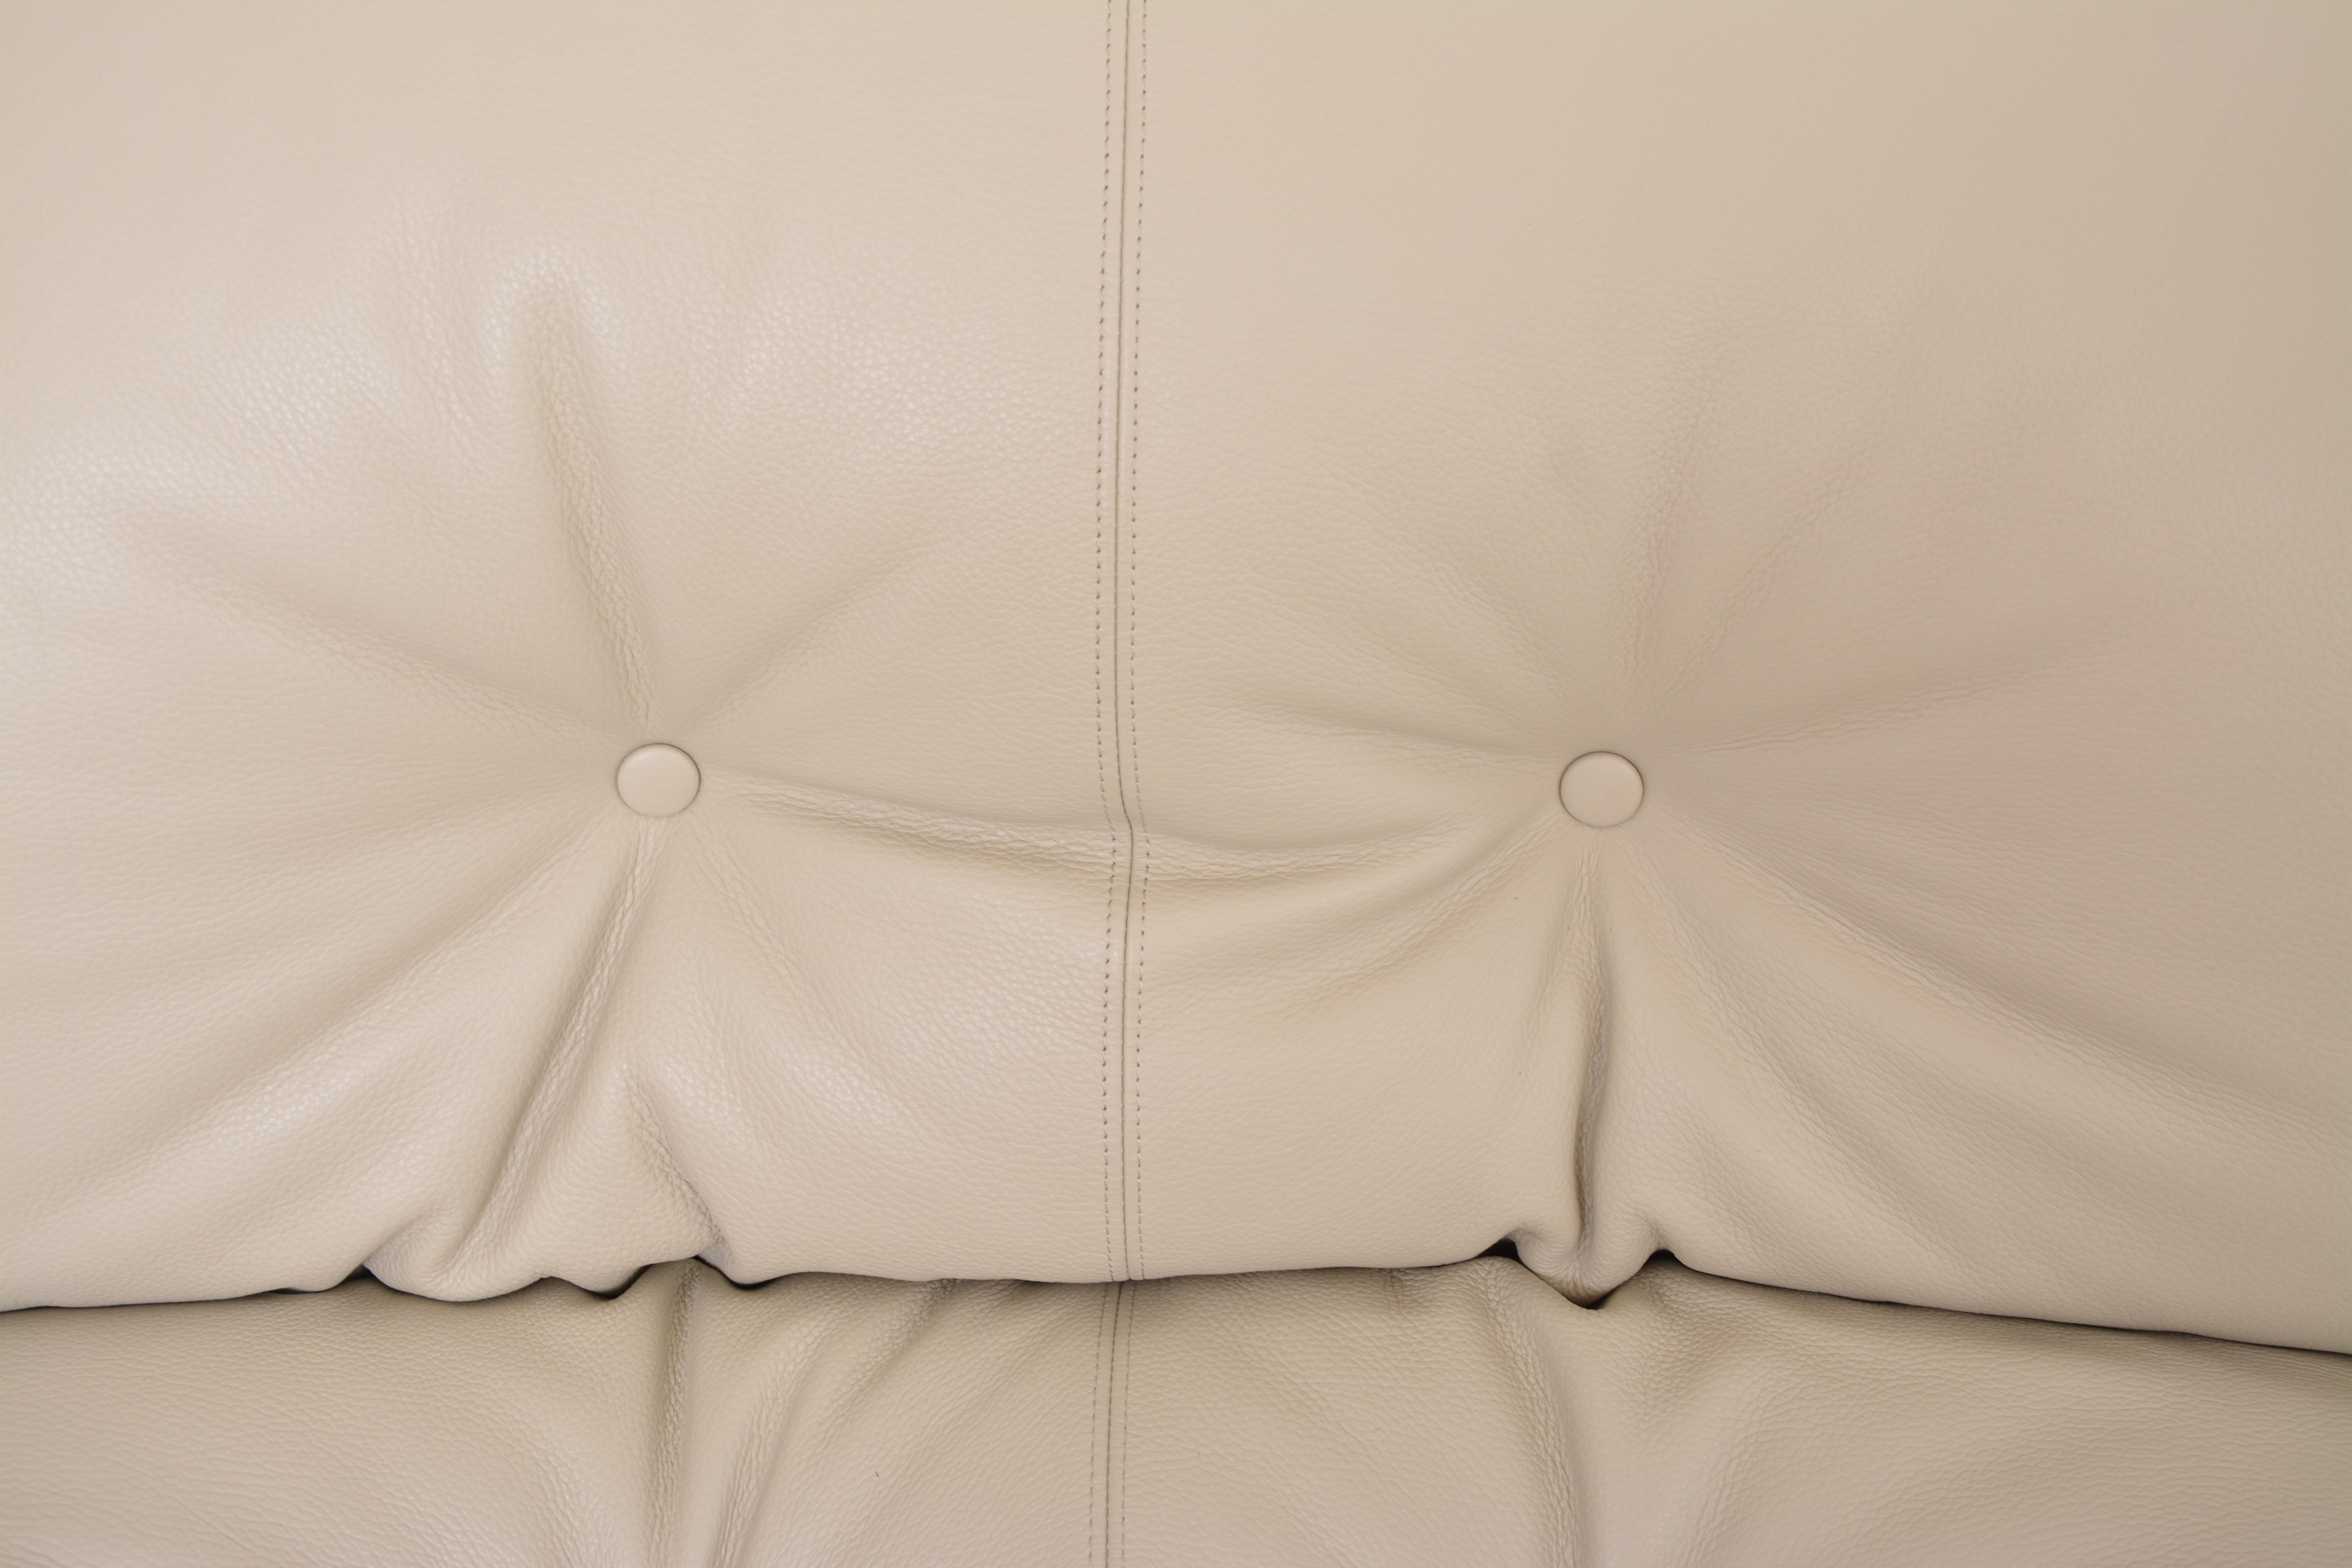 Afra & Tobia Scarpa 'Soriana' Chaise Lounge Stuhl aus grauem Leder im Angebot 2